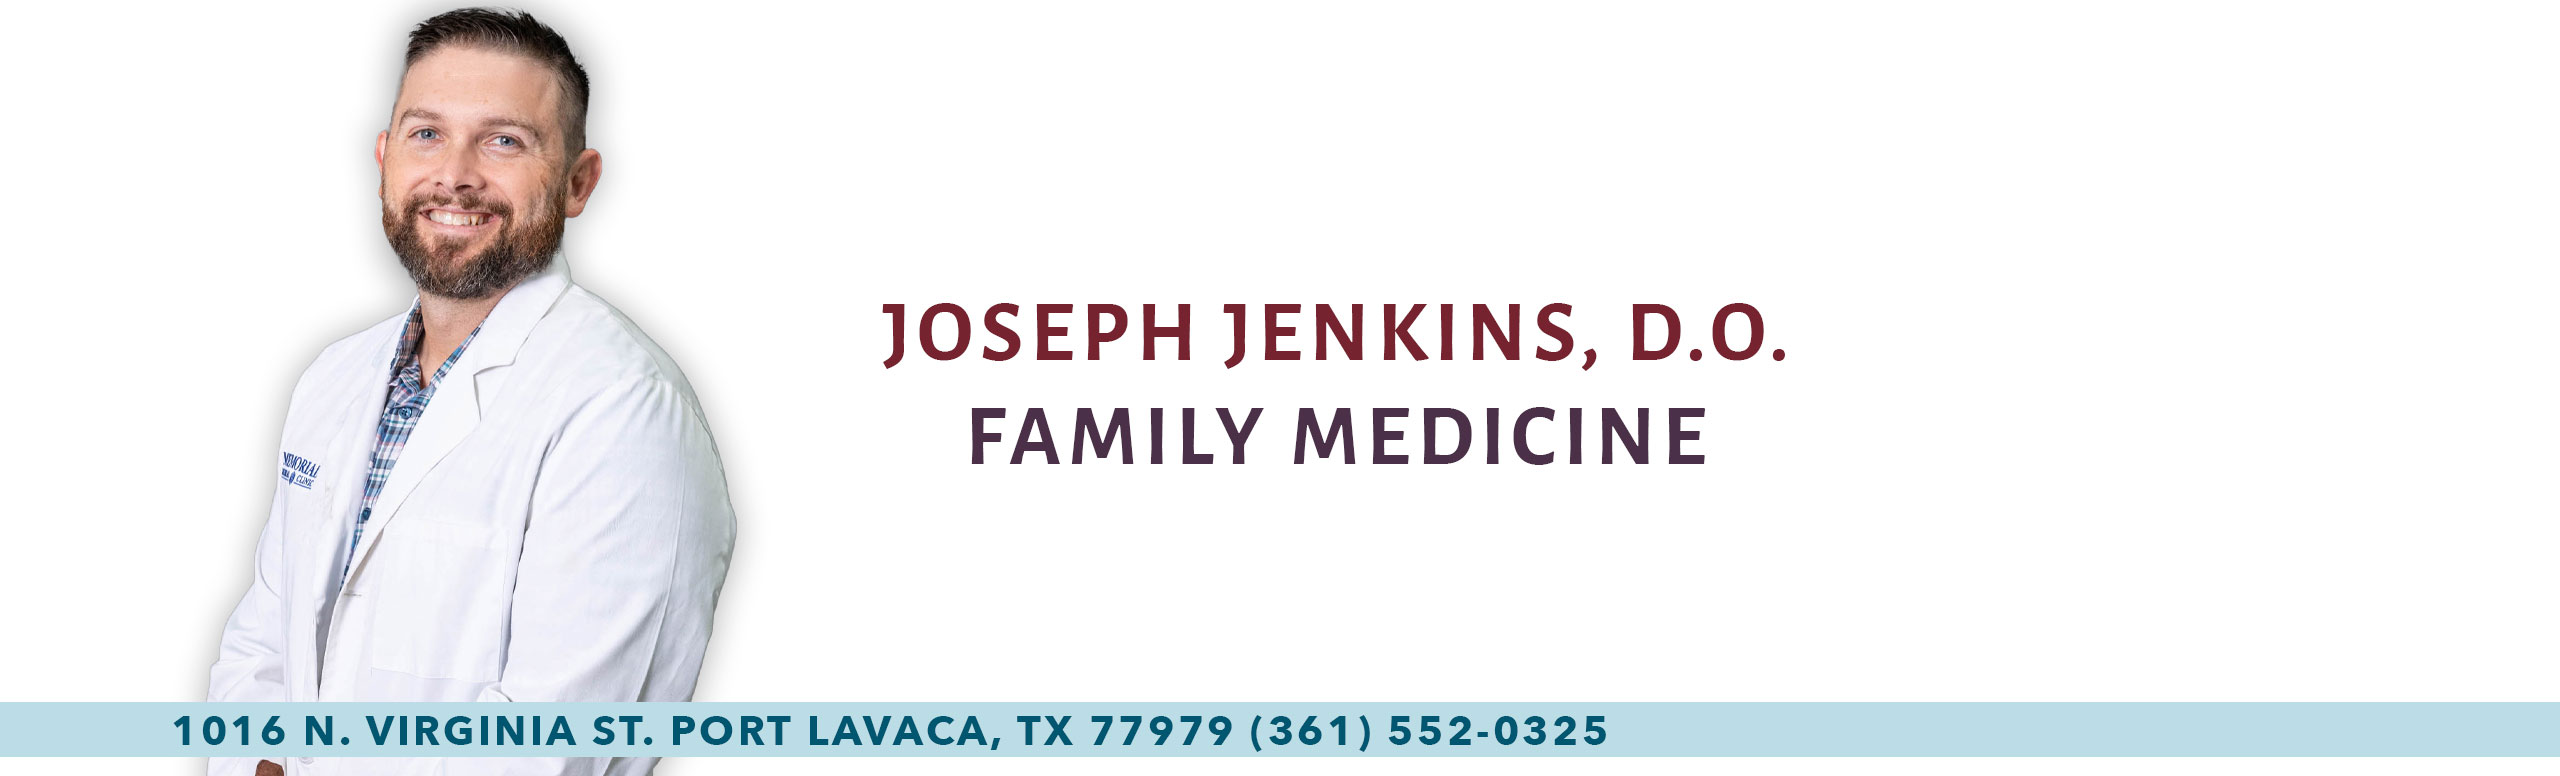 Joseph Jenkins, DO
Family Medicine
1016 N. VIRGINA ST. PORT LAVACA, TX 77979 (361) 552-0325